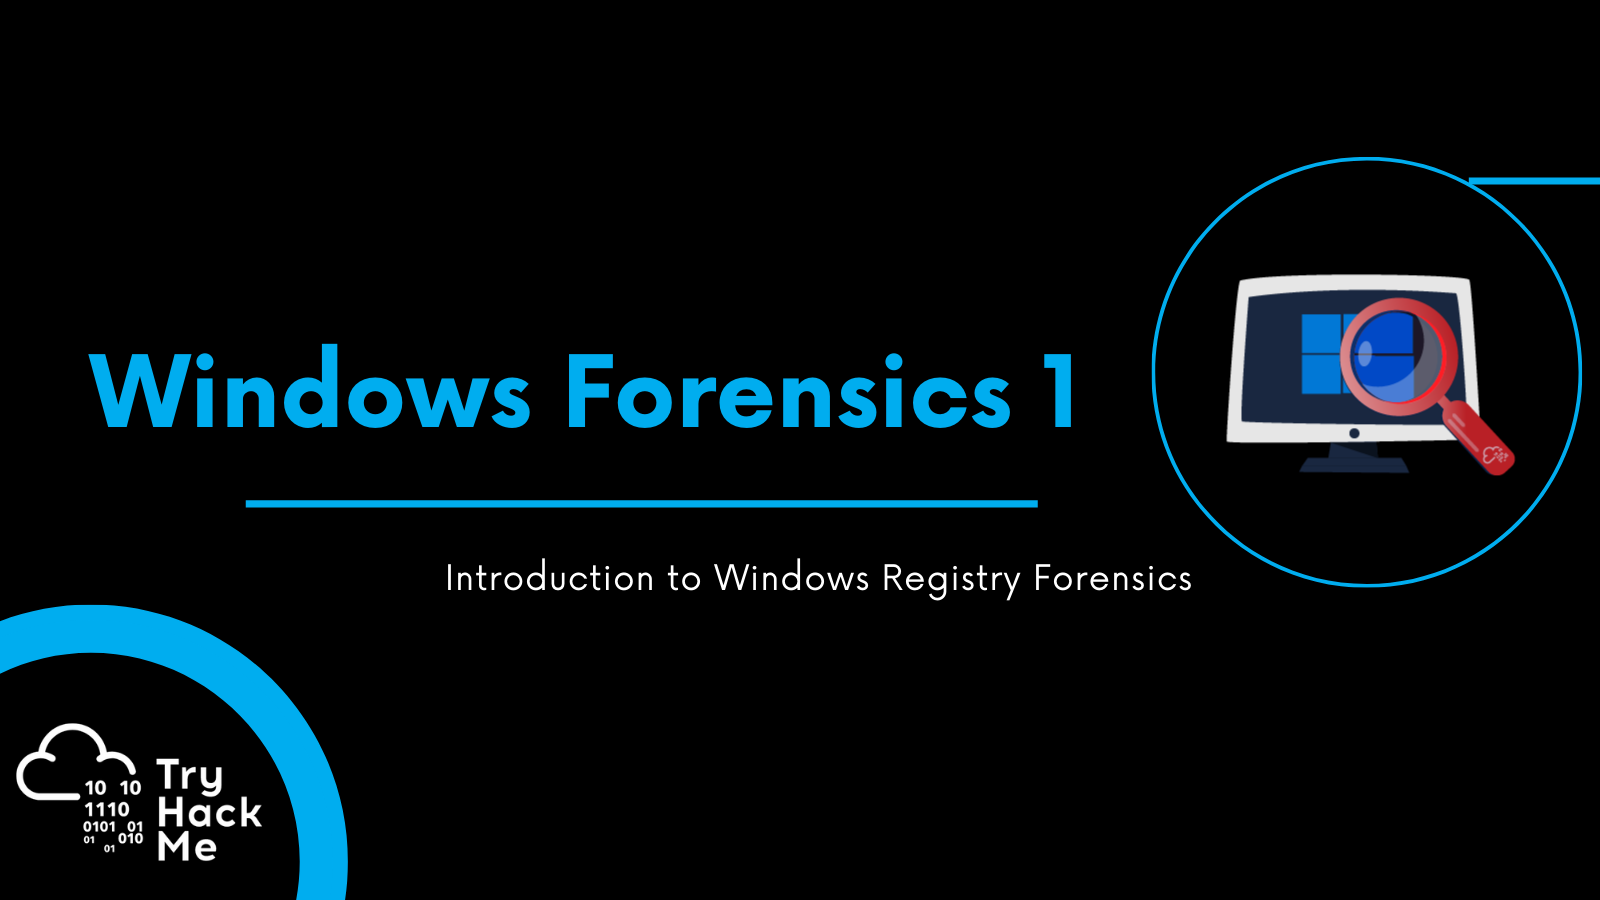 Windows-Forensics-1 image